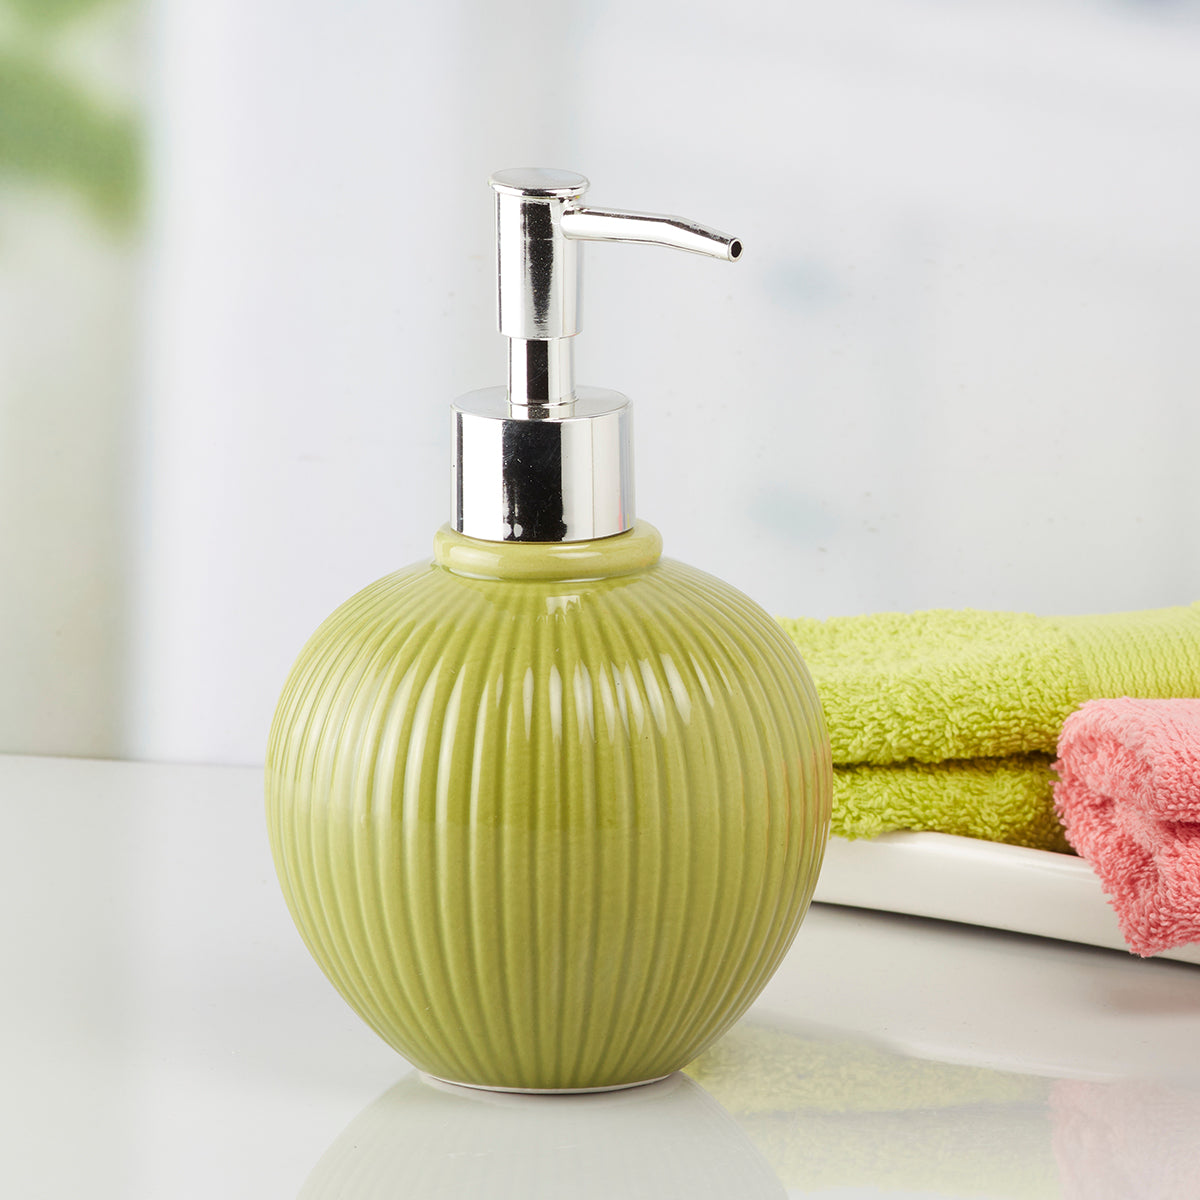 Ceramic Soap Dispenser handwash Pump for Bathroom, Set of 1, Green (8049)